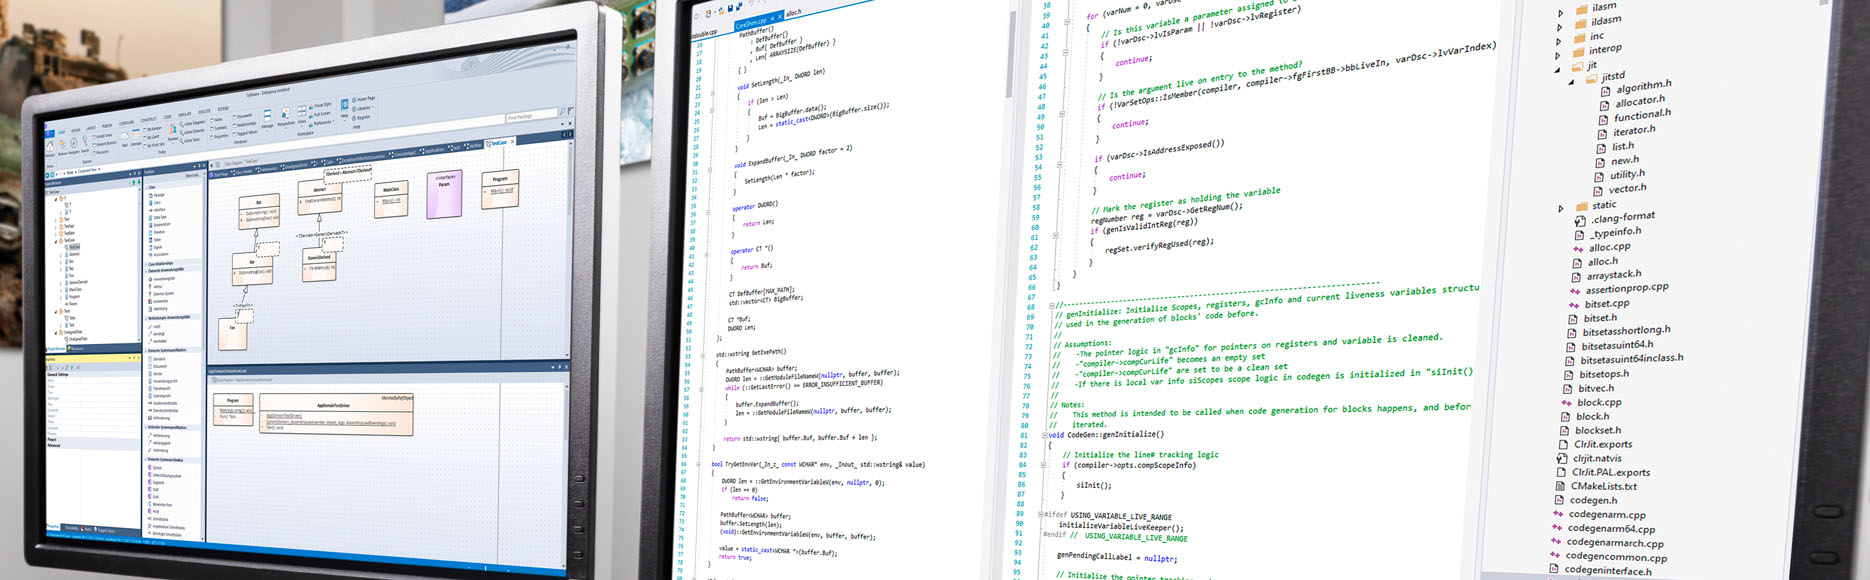 Screens show programming code